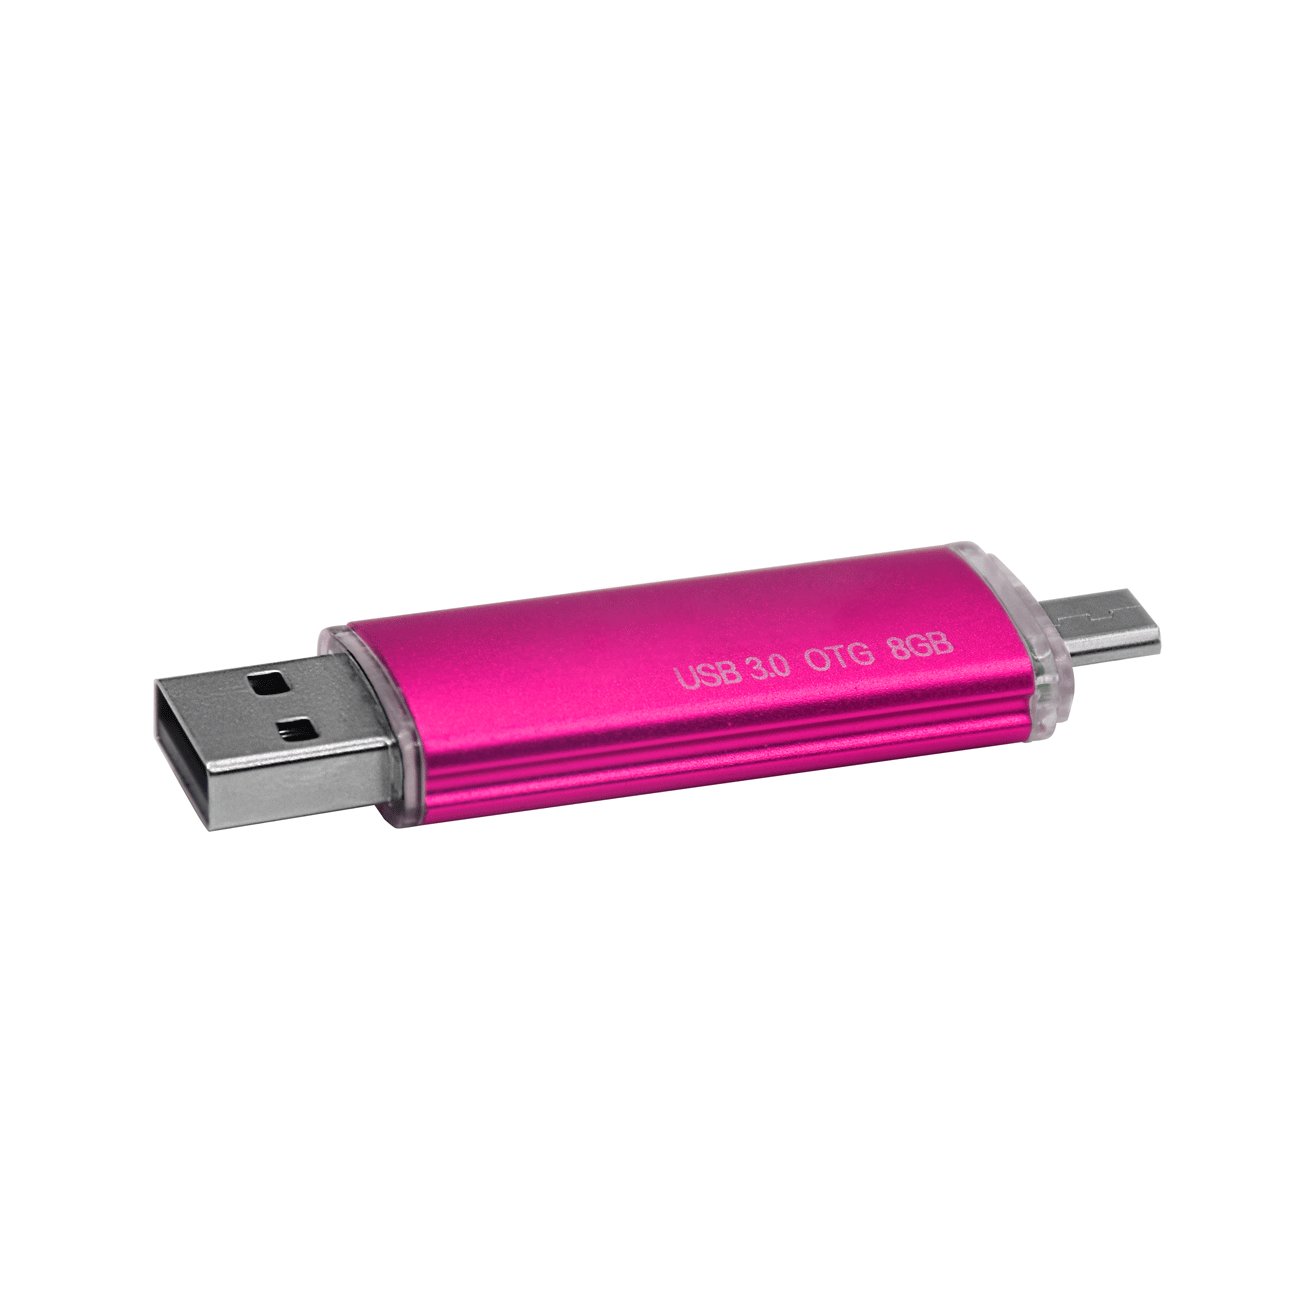 USB 3.0 Flash Drive, backward compatible with USB 2.0 2